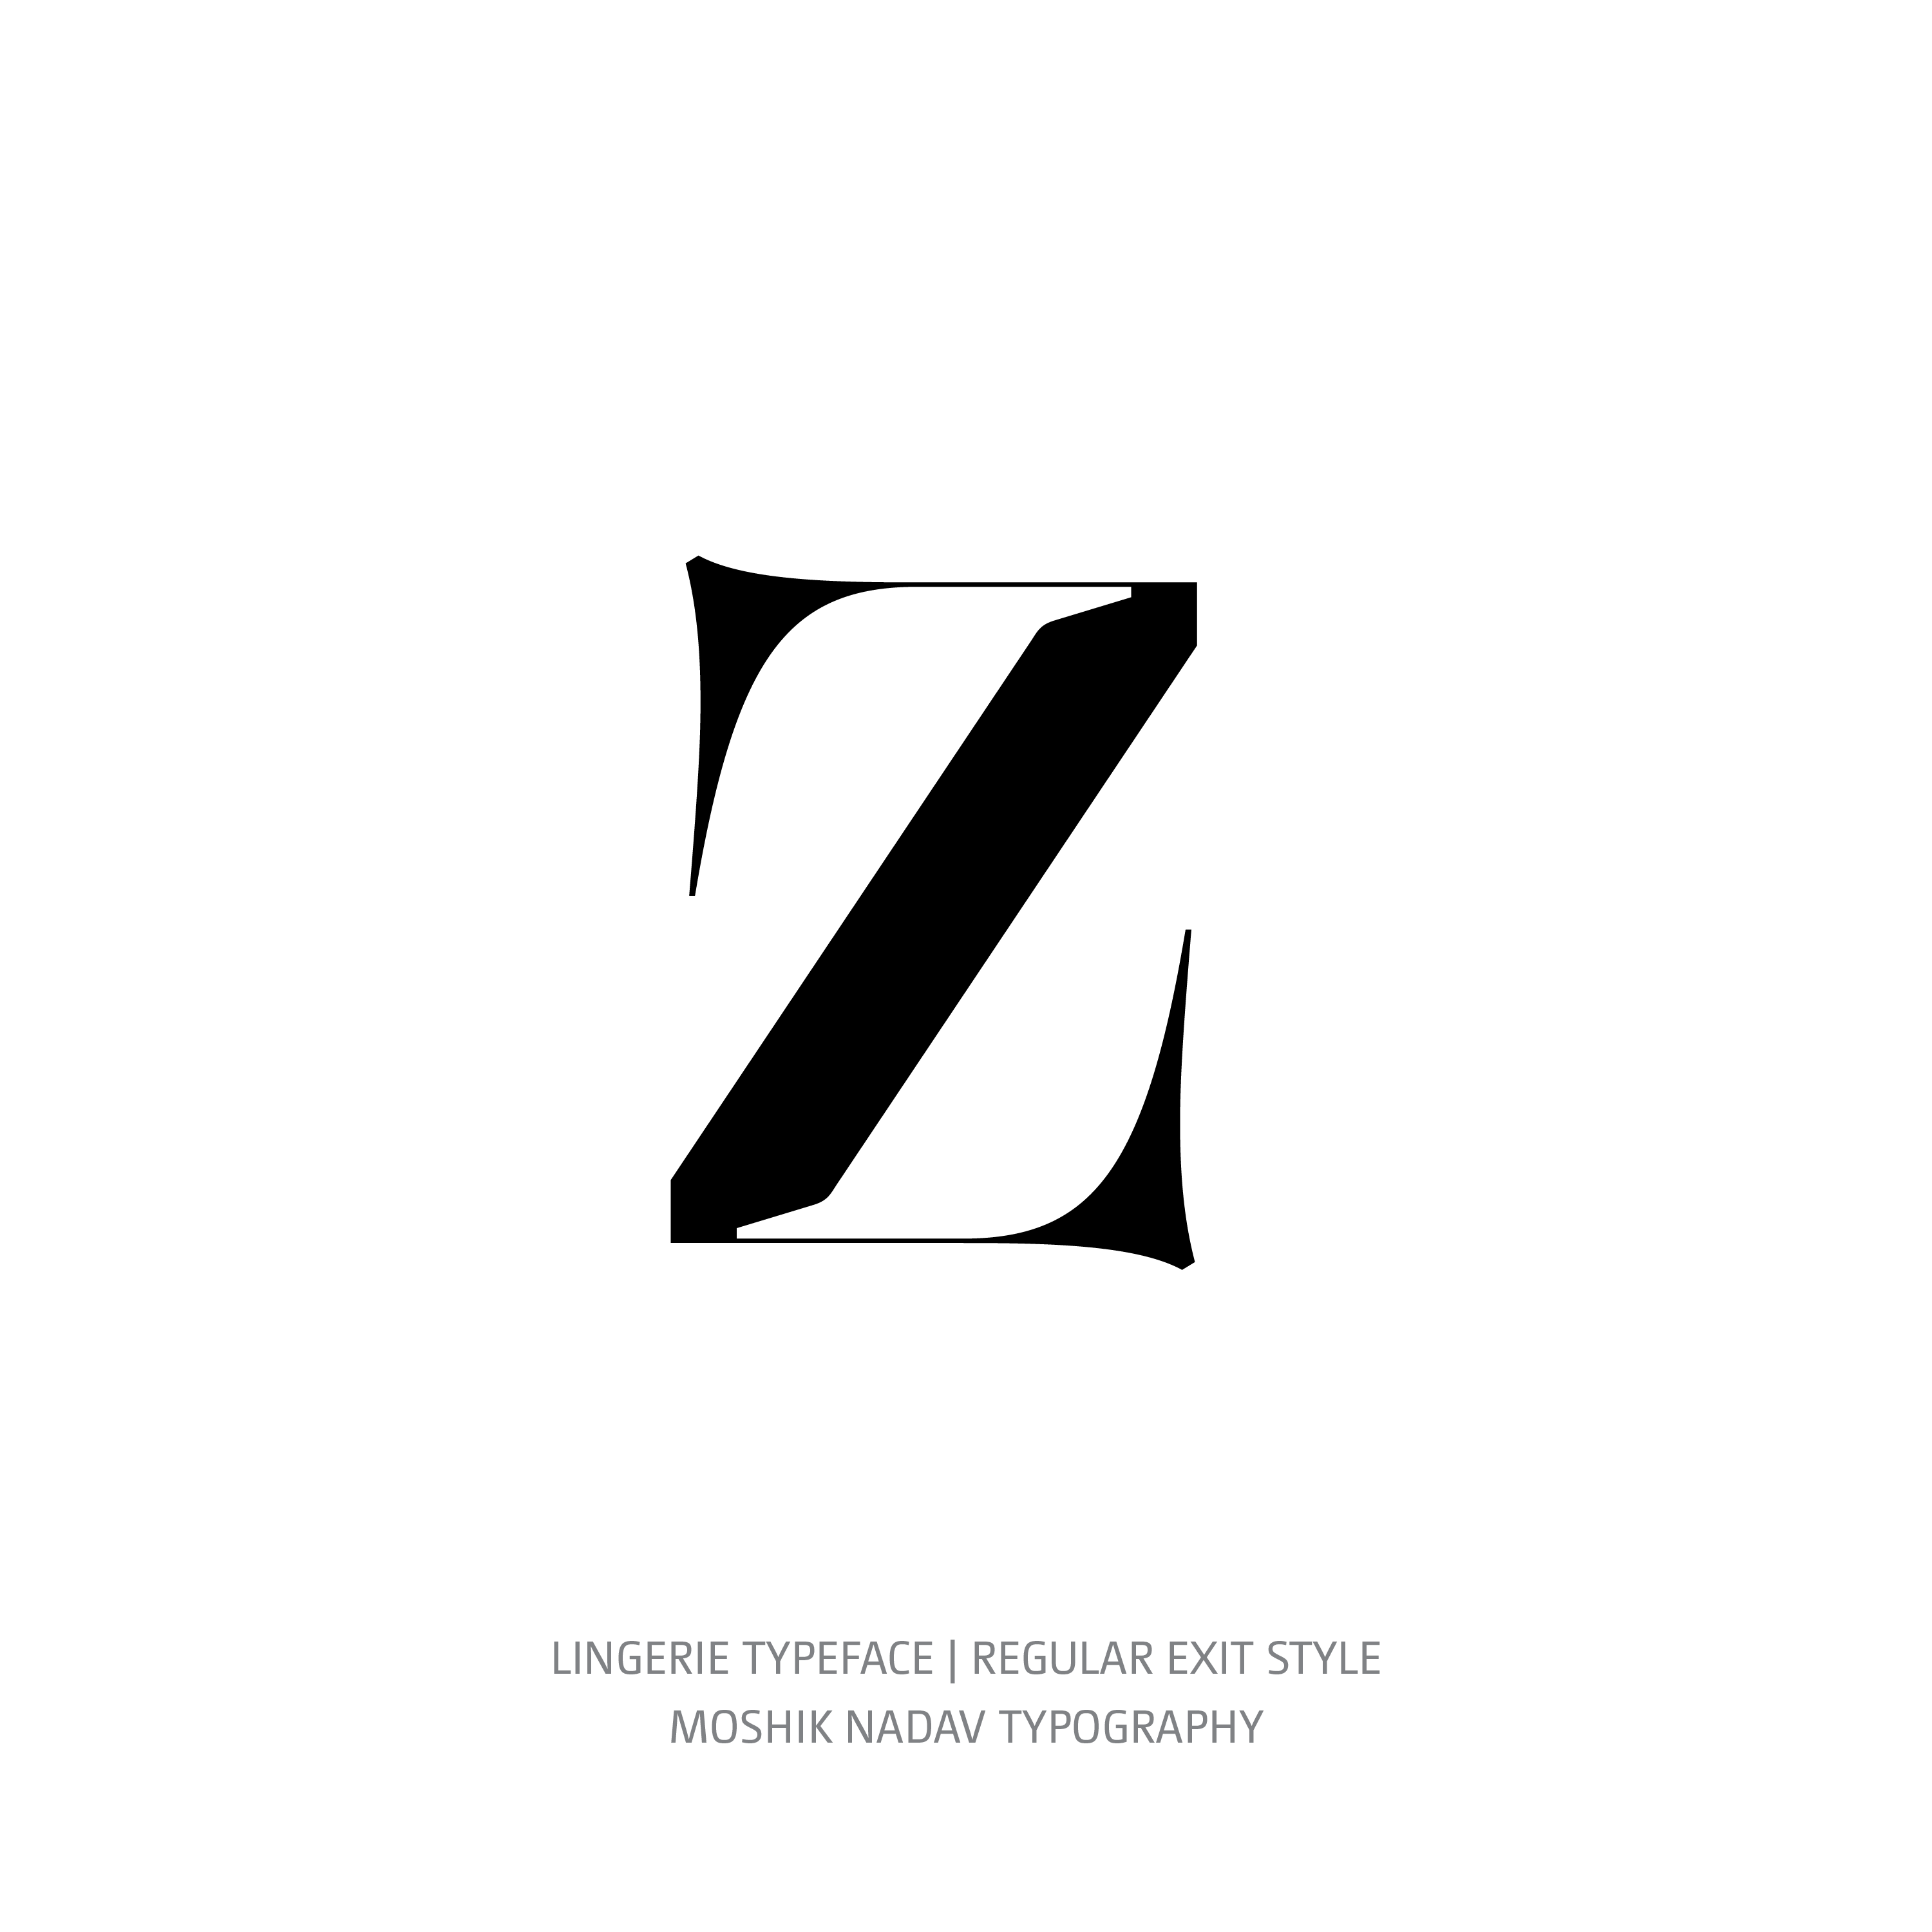 Lingerie Typeface Regular Exit z